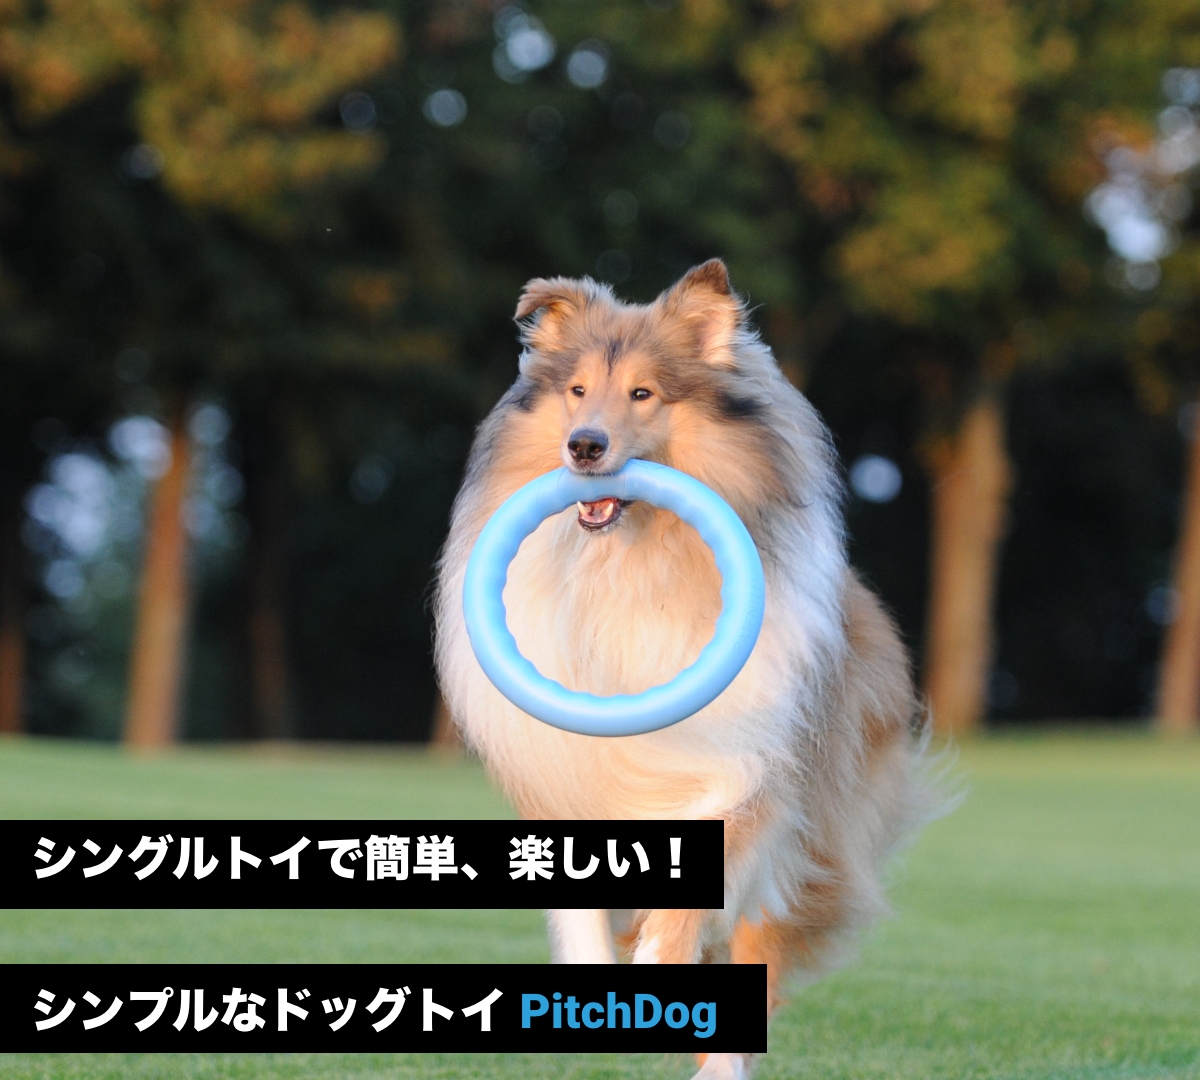 Pitch Dog